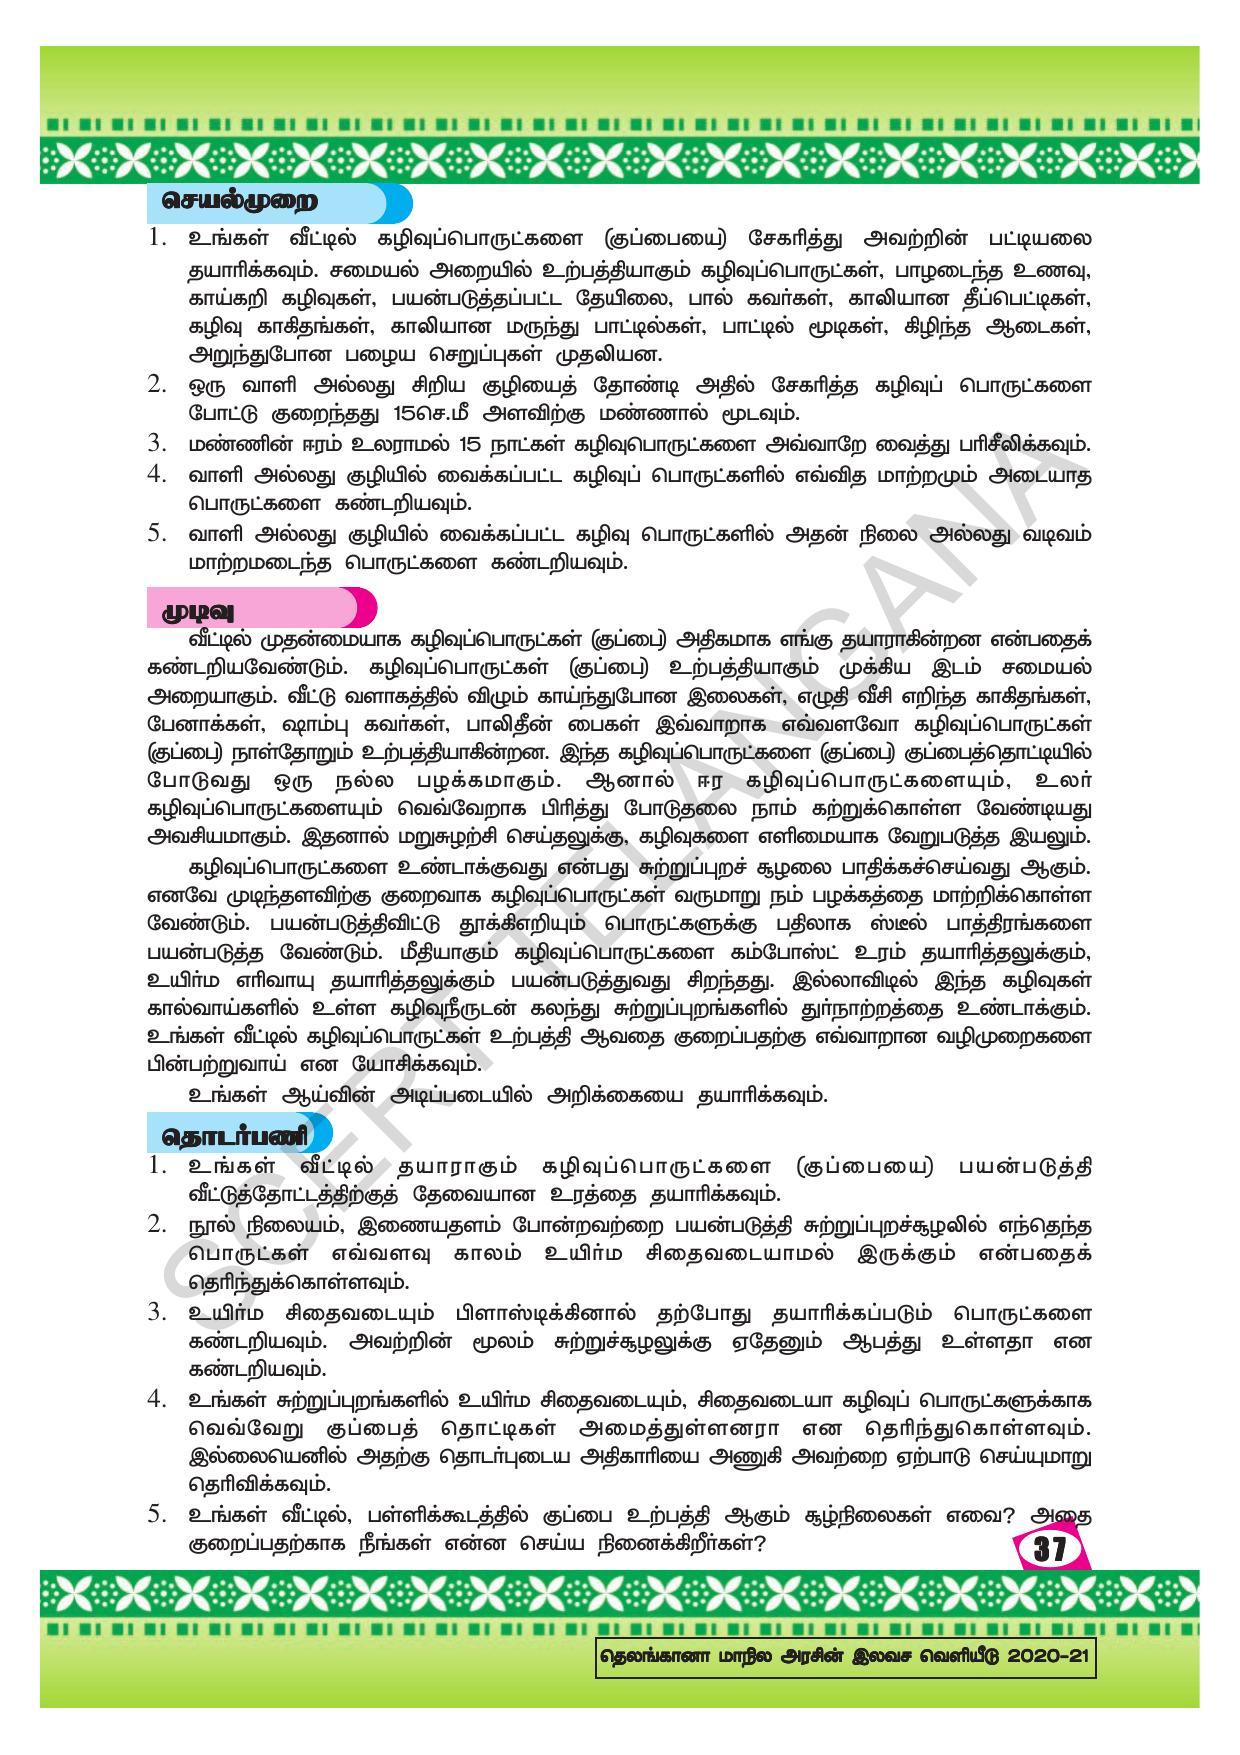 TS SCERT Class 10 Social Environmental Education (Tamil Medium) Text Book - Page 45